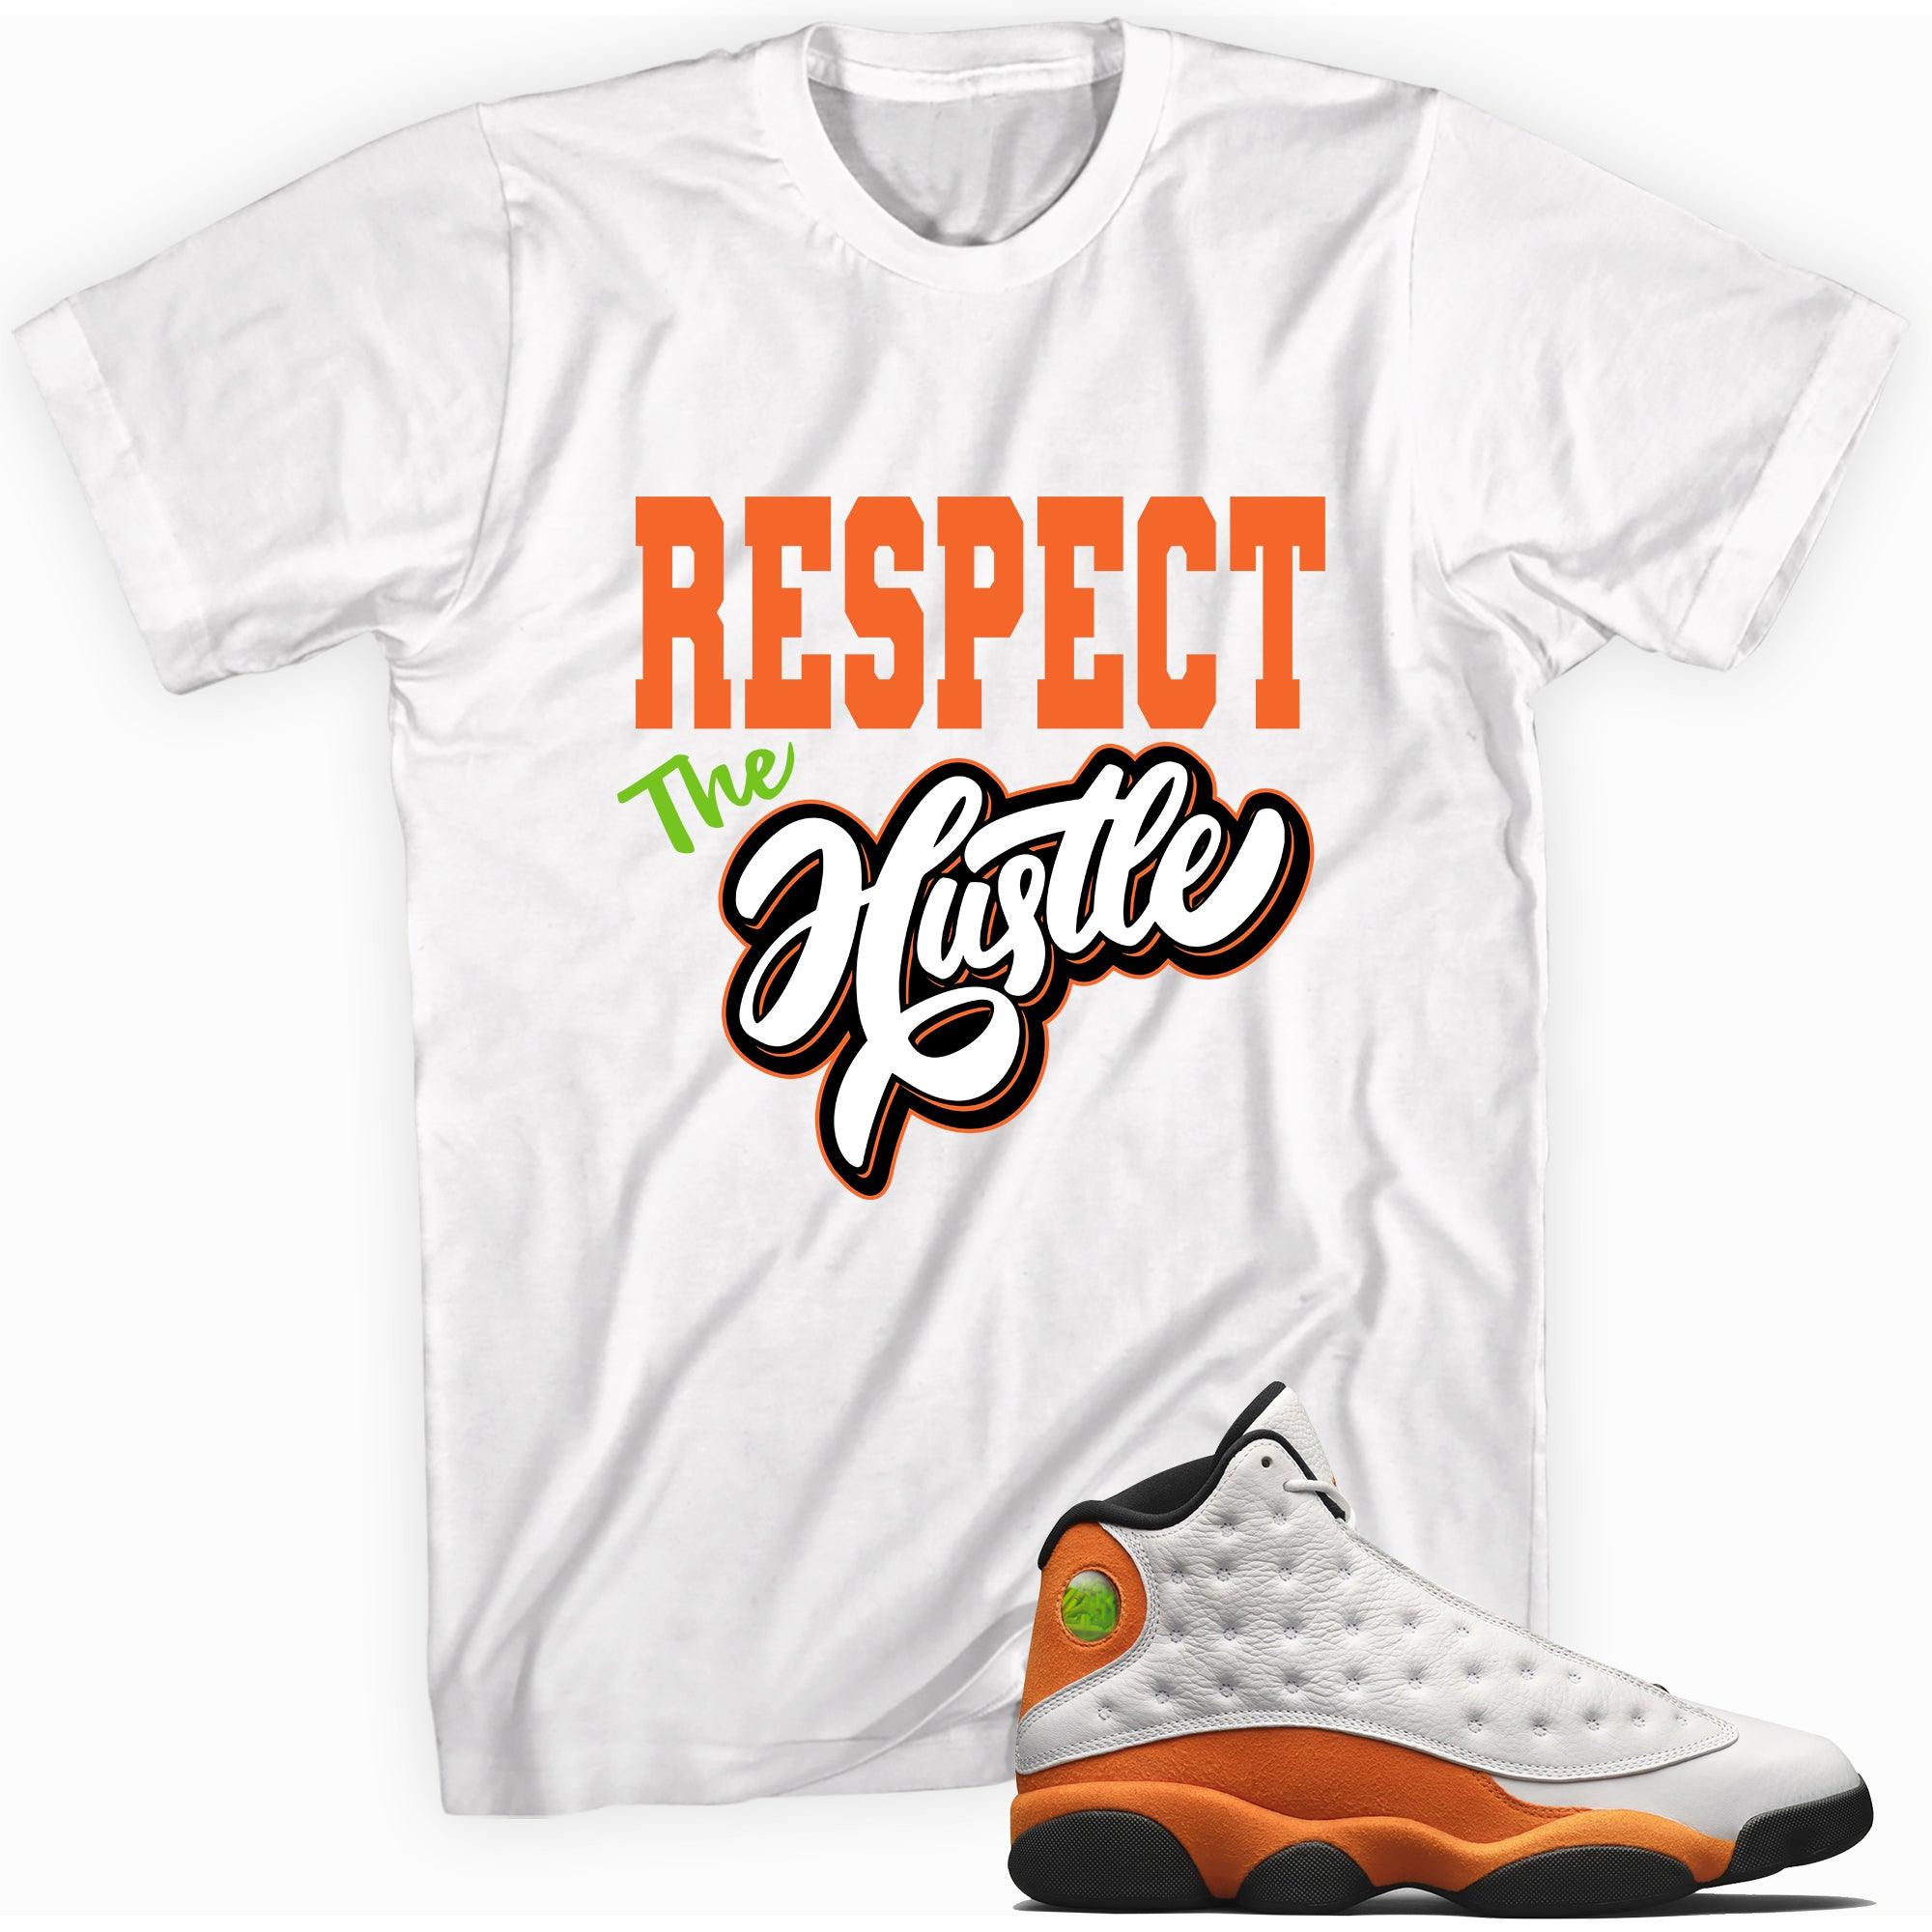 Respect The Hustle Shirt AJ 13s Retro Starfish photo